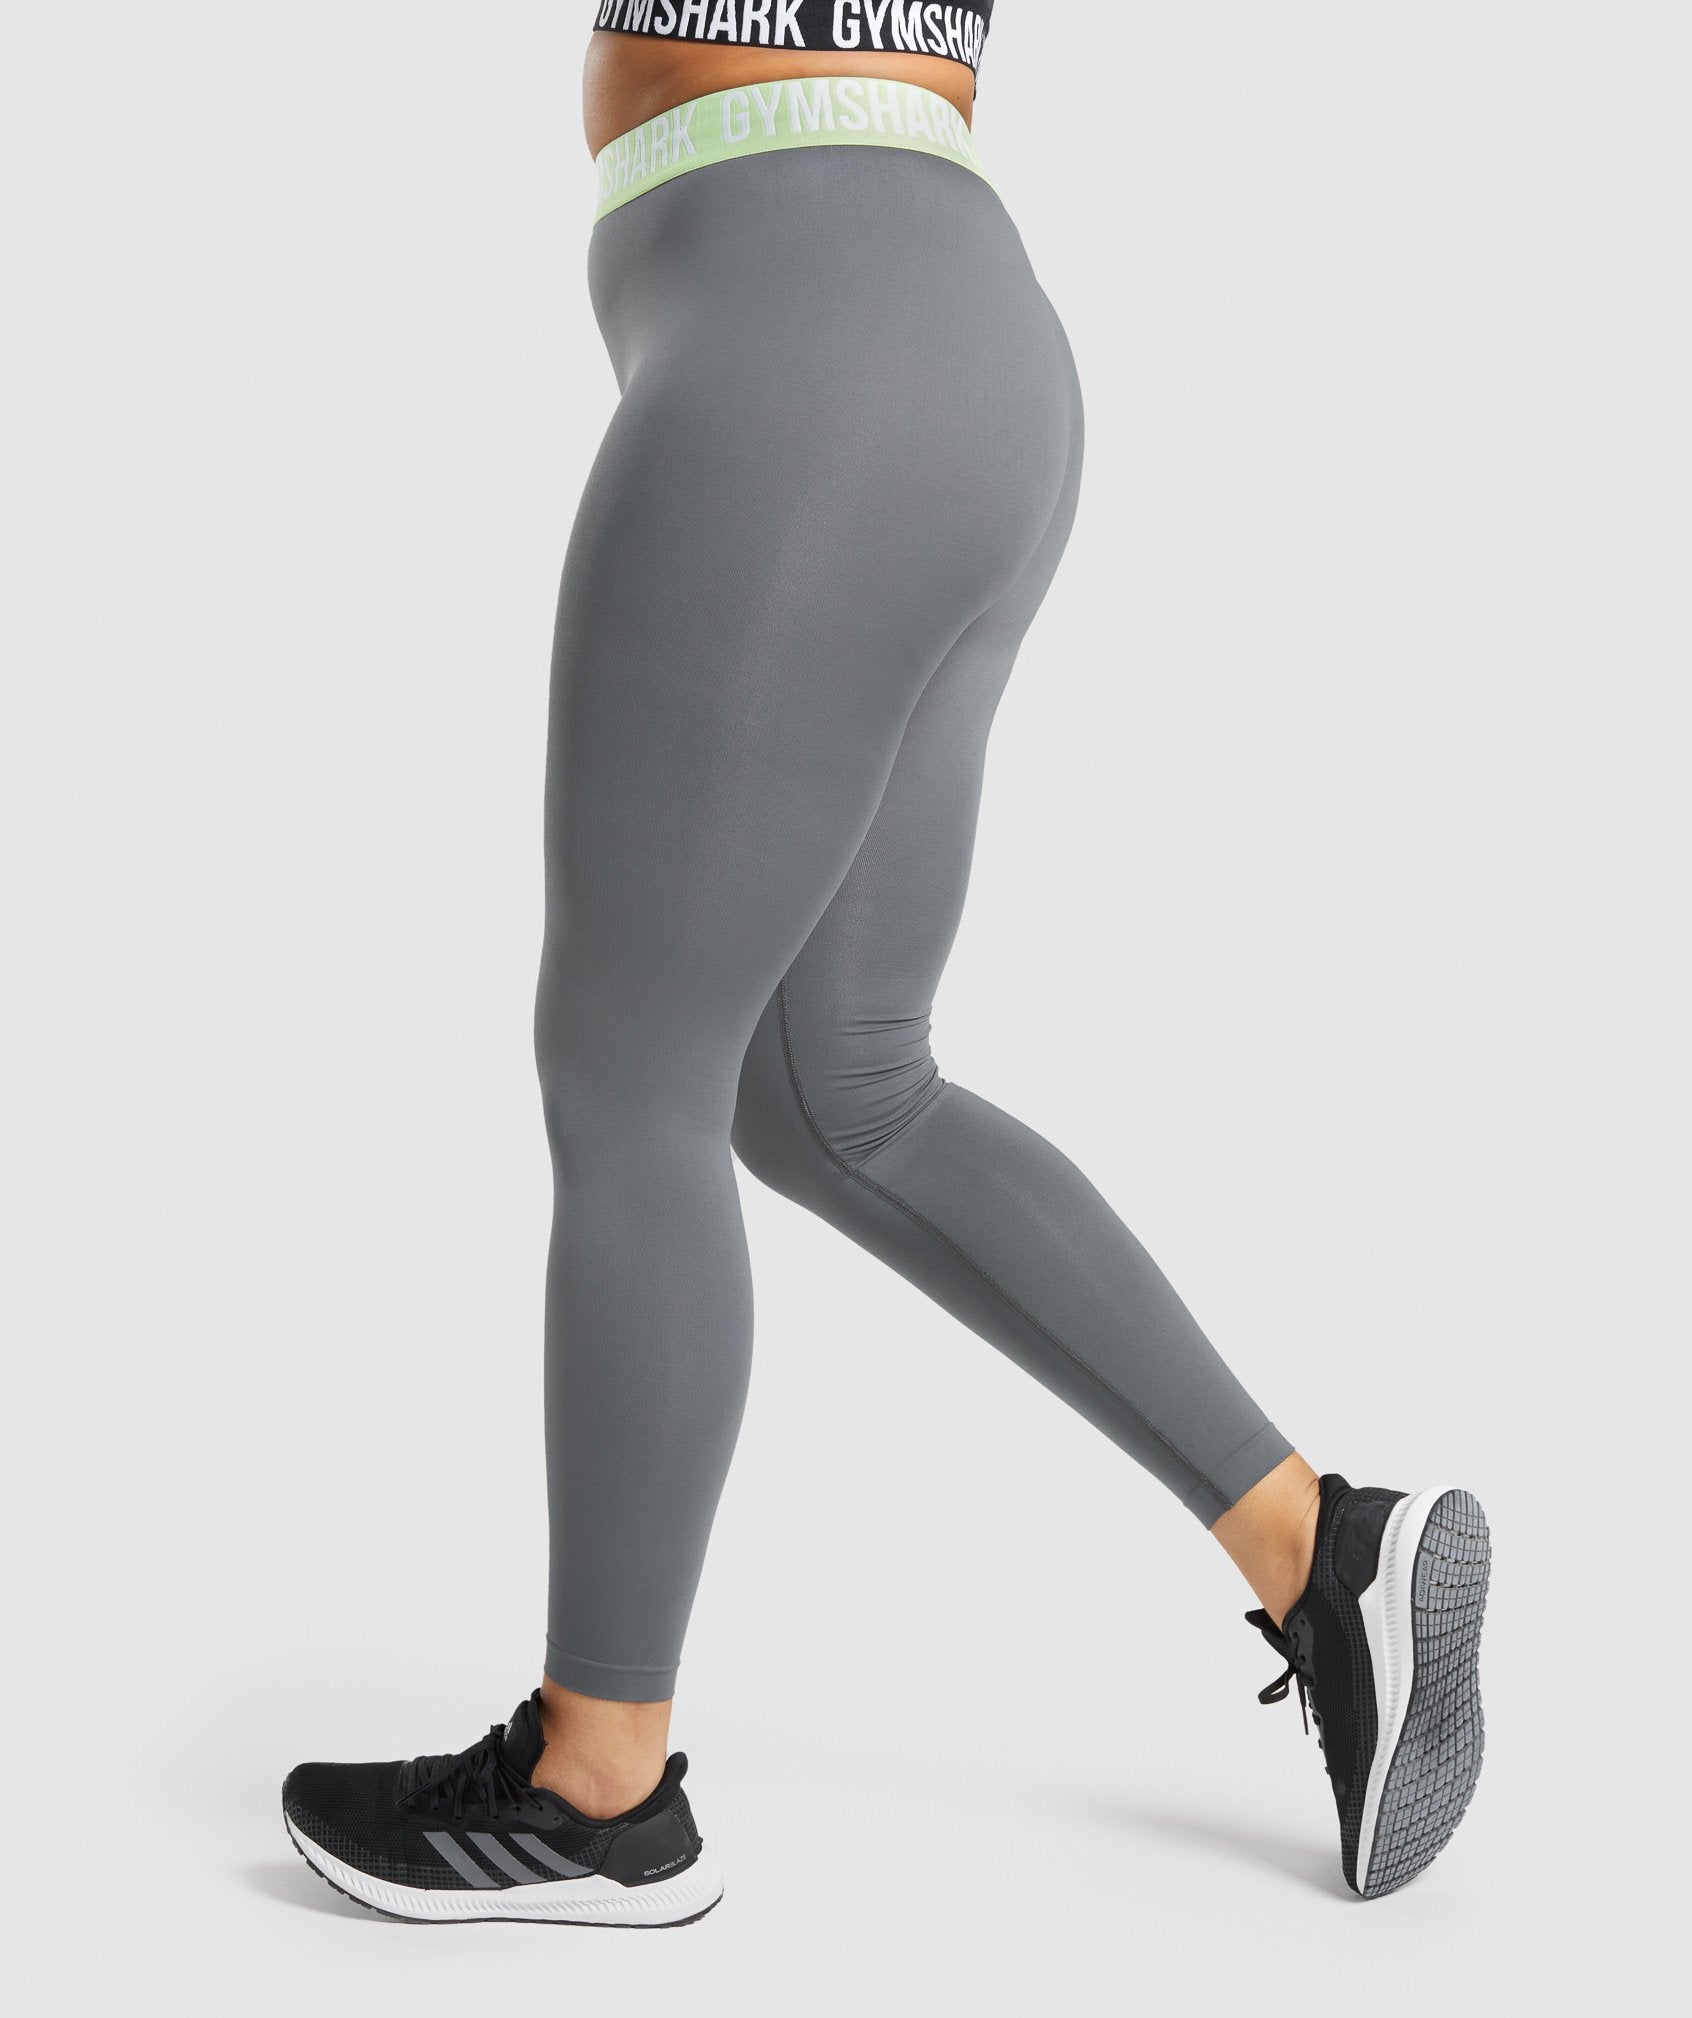 Gymshark Women's S Seamless Leggings Charcoal Gray Citrus Yellow